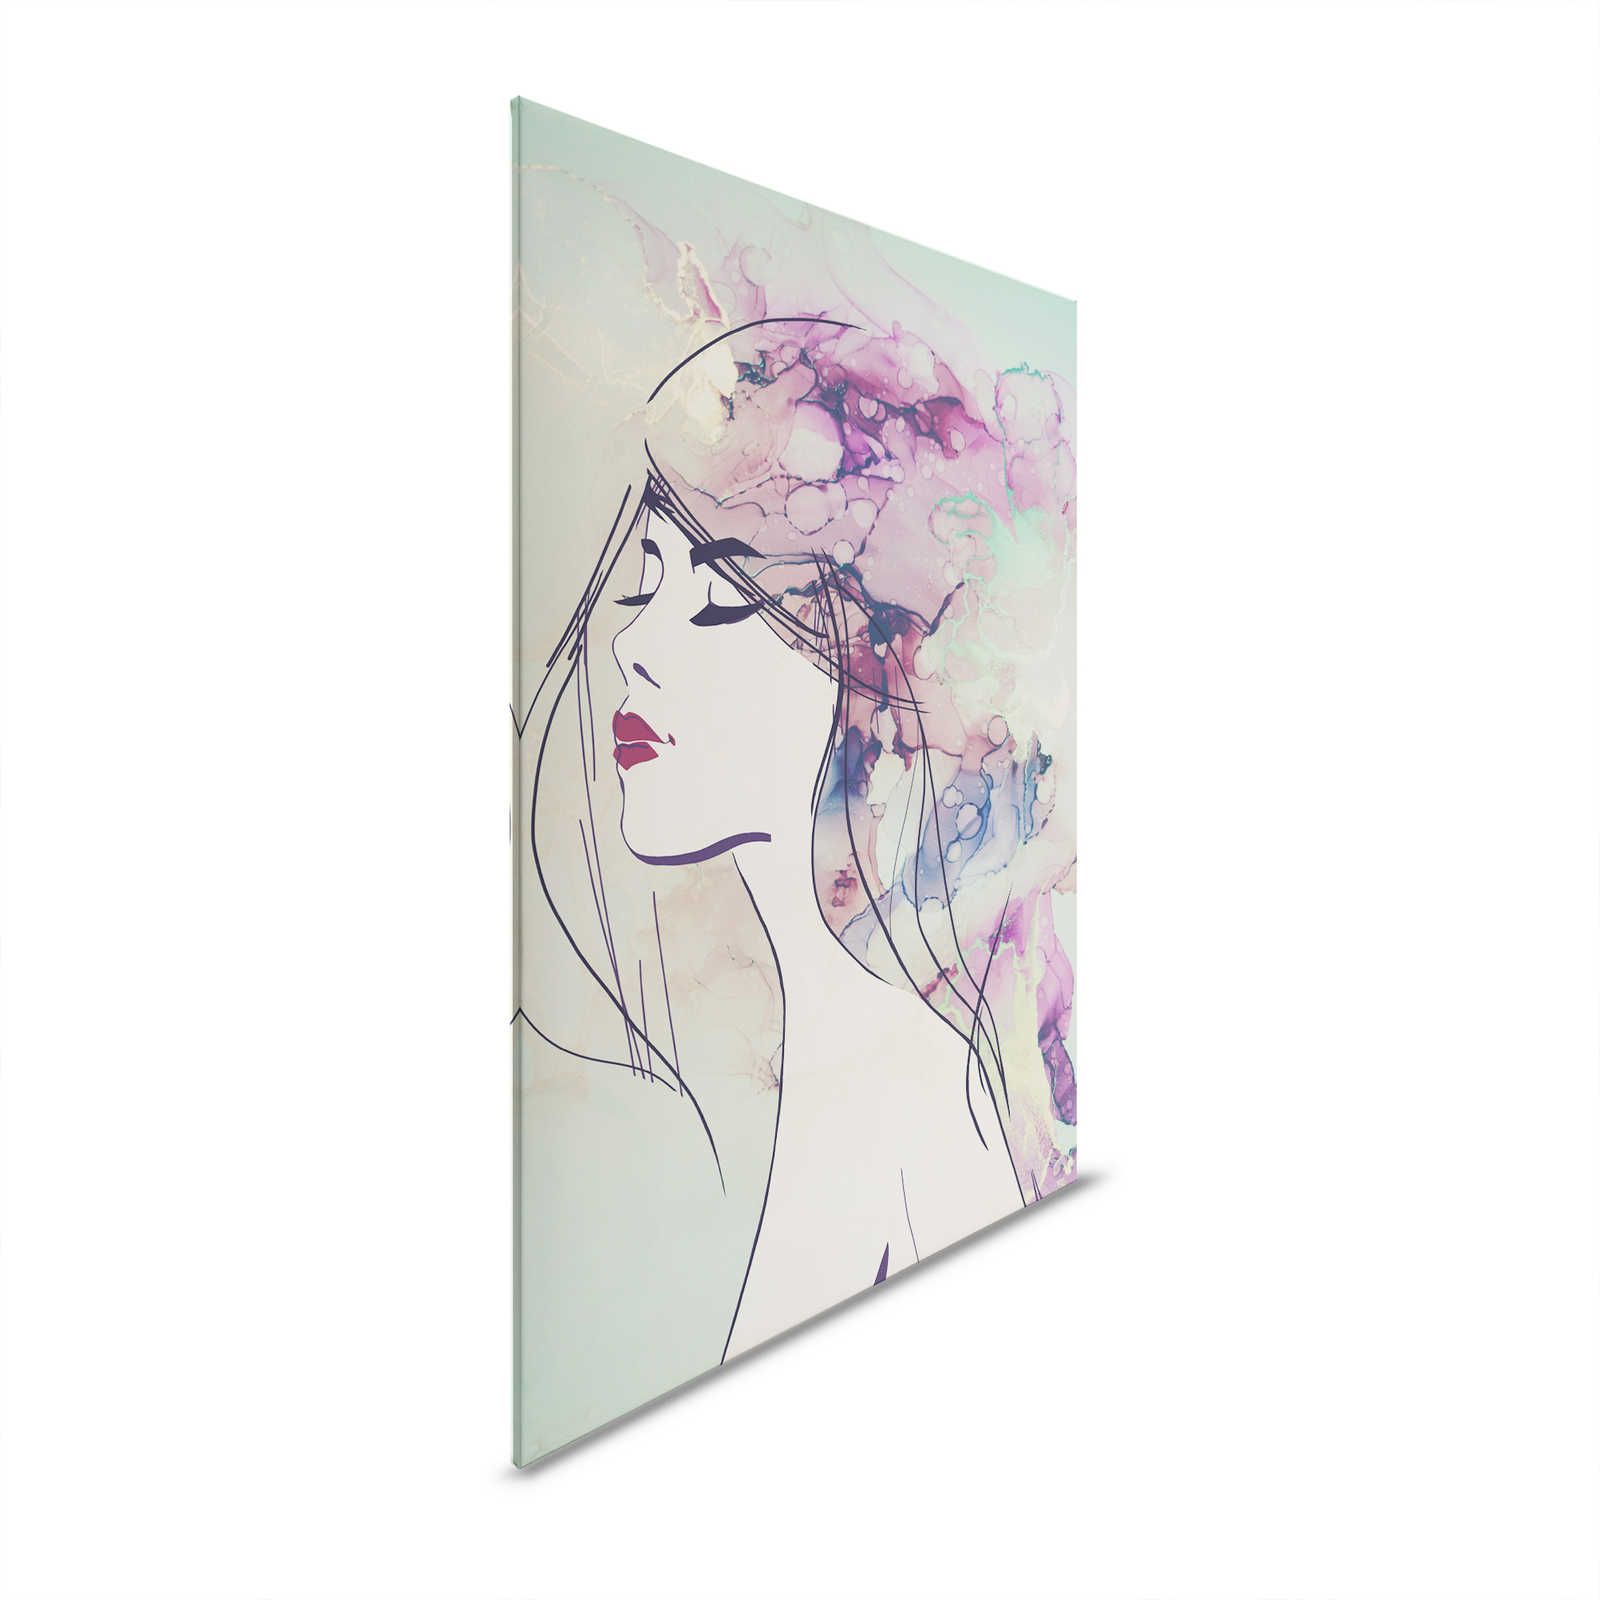         Acryl Design Leinwandbild Frauengesicht in Türkis & Violett – 0,90 m x 0,60 m
    